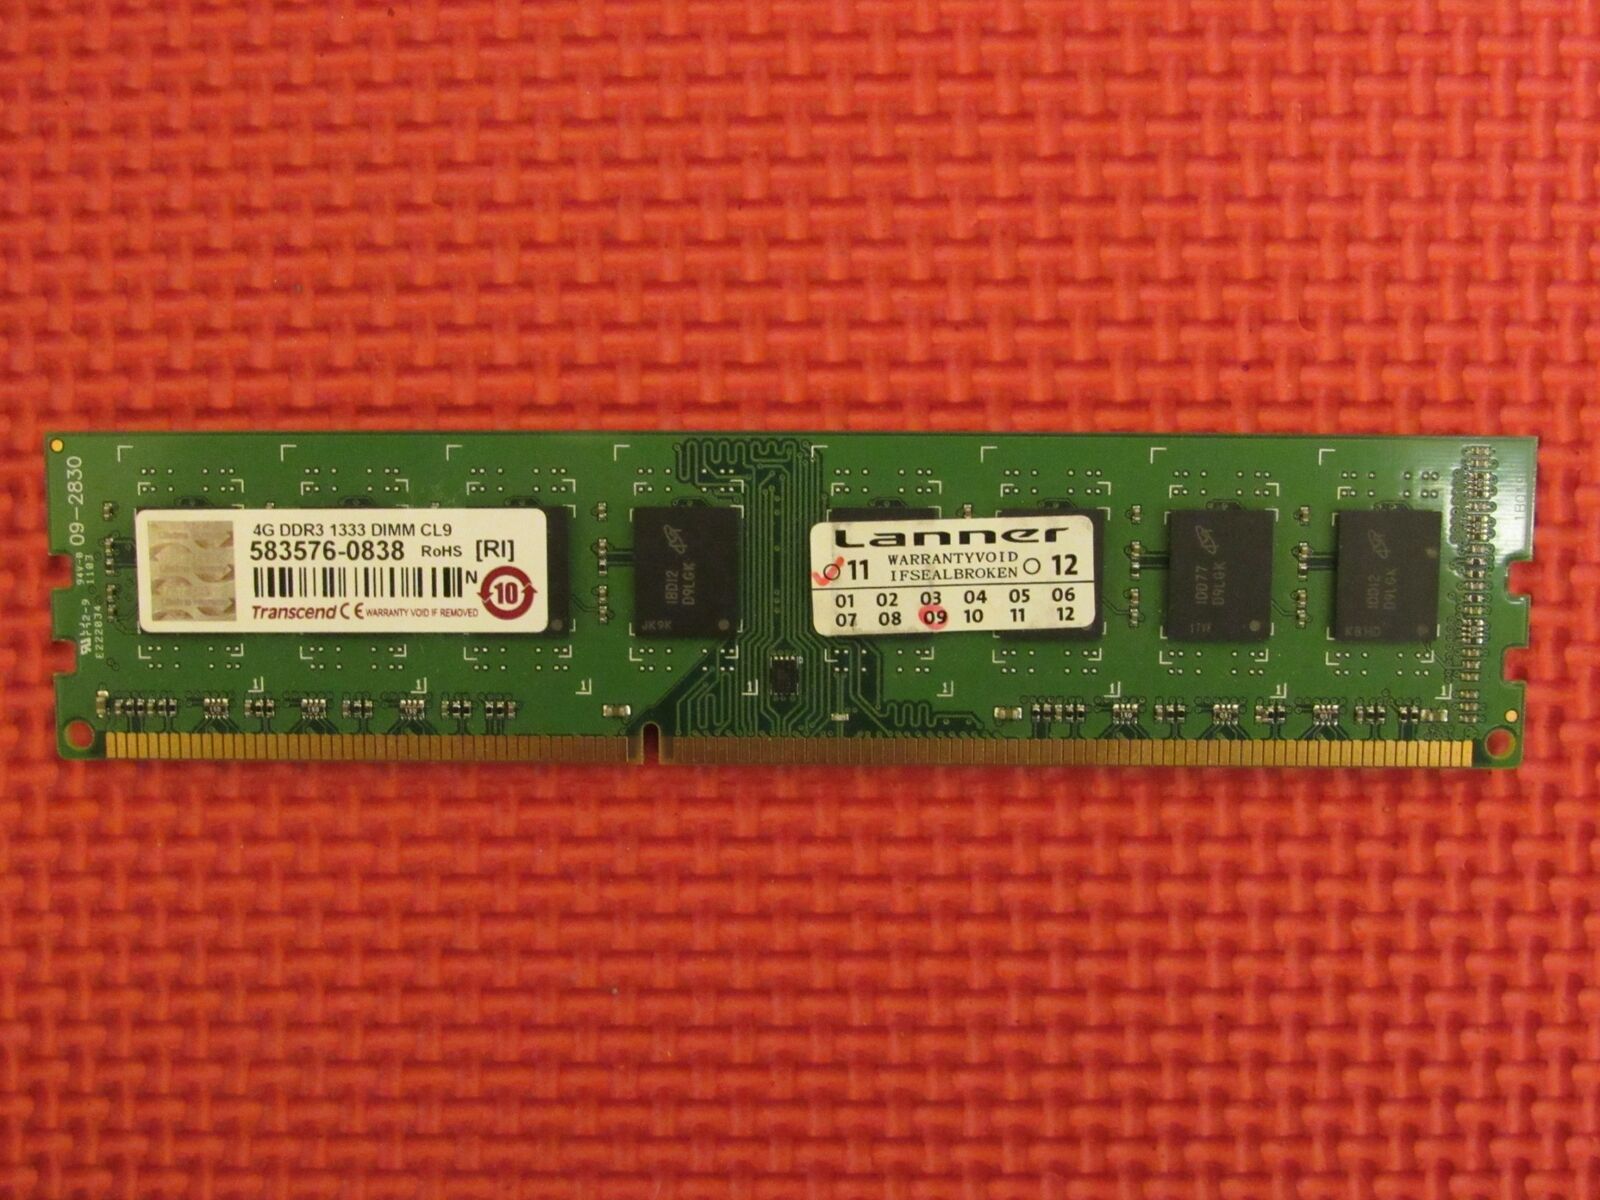 Transcend 4GB (1-Stick) PC3-10600 DDR3 1333 Desktop PC DIMM Memory 583576-0838